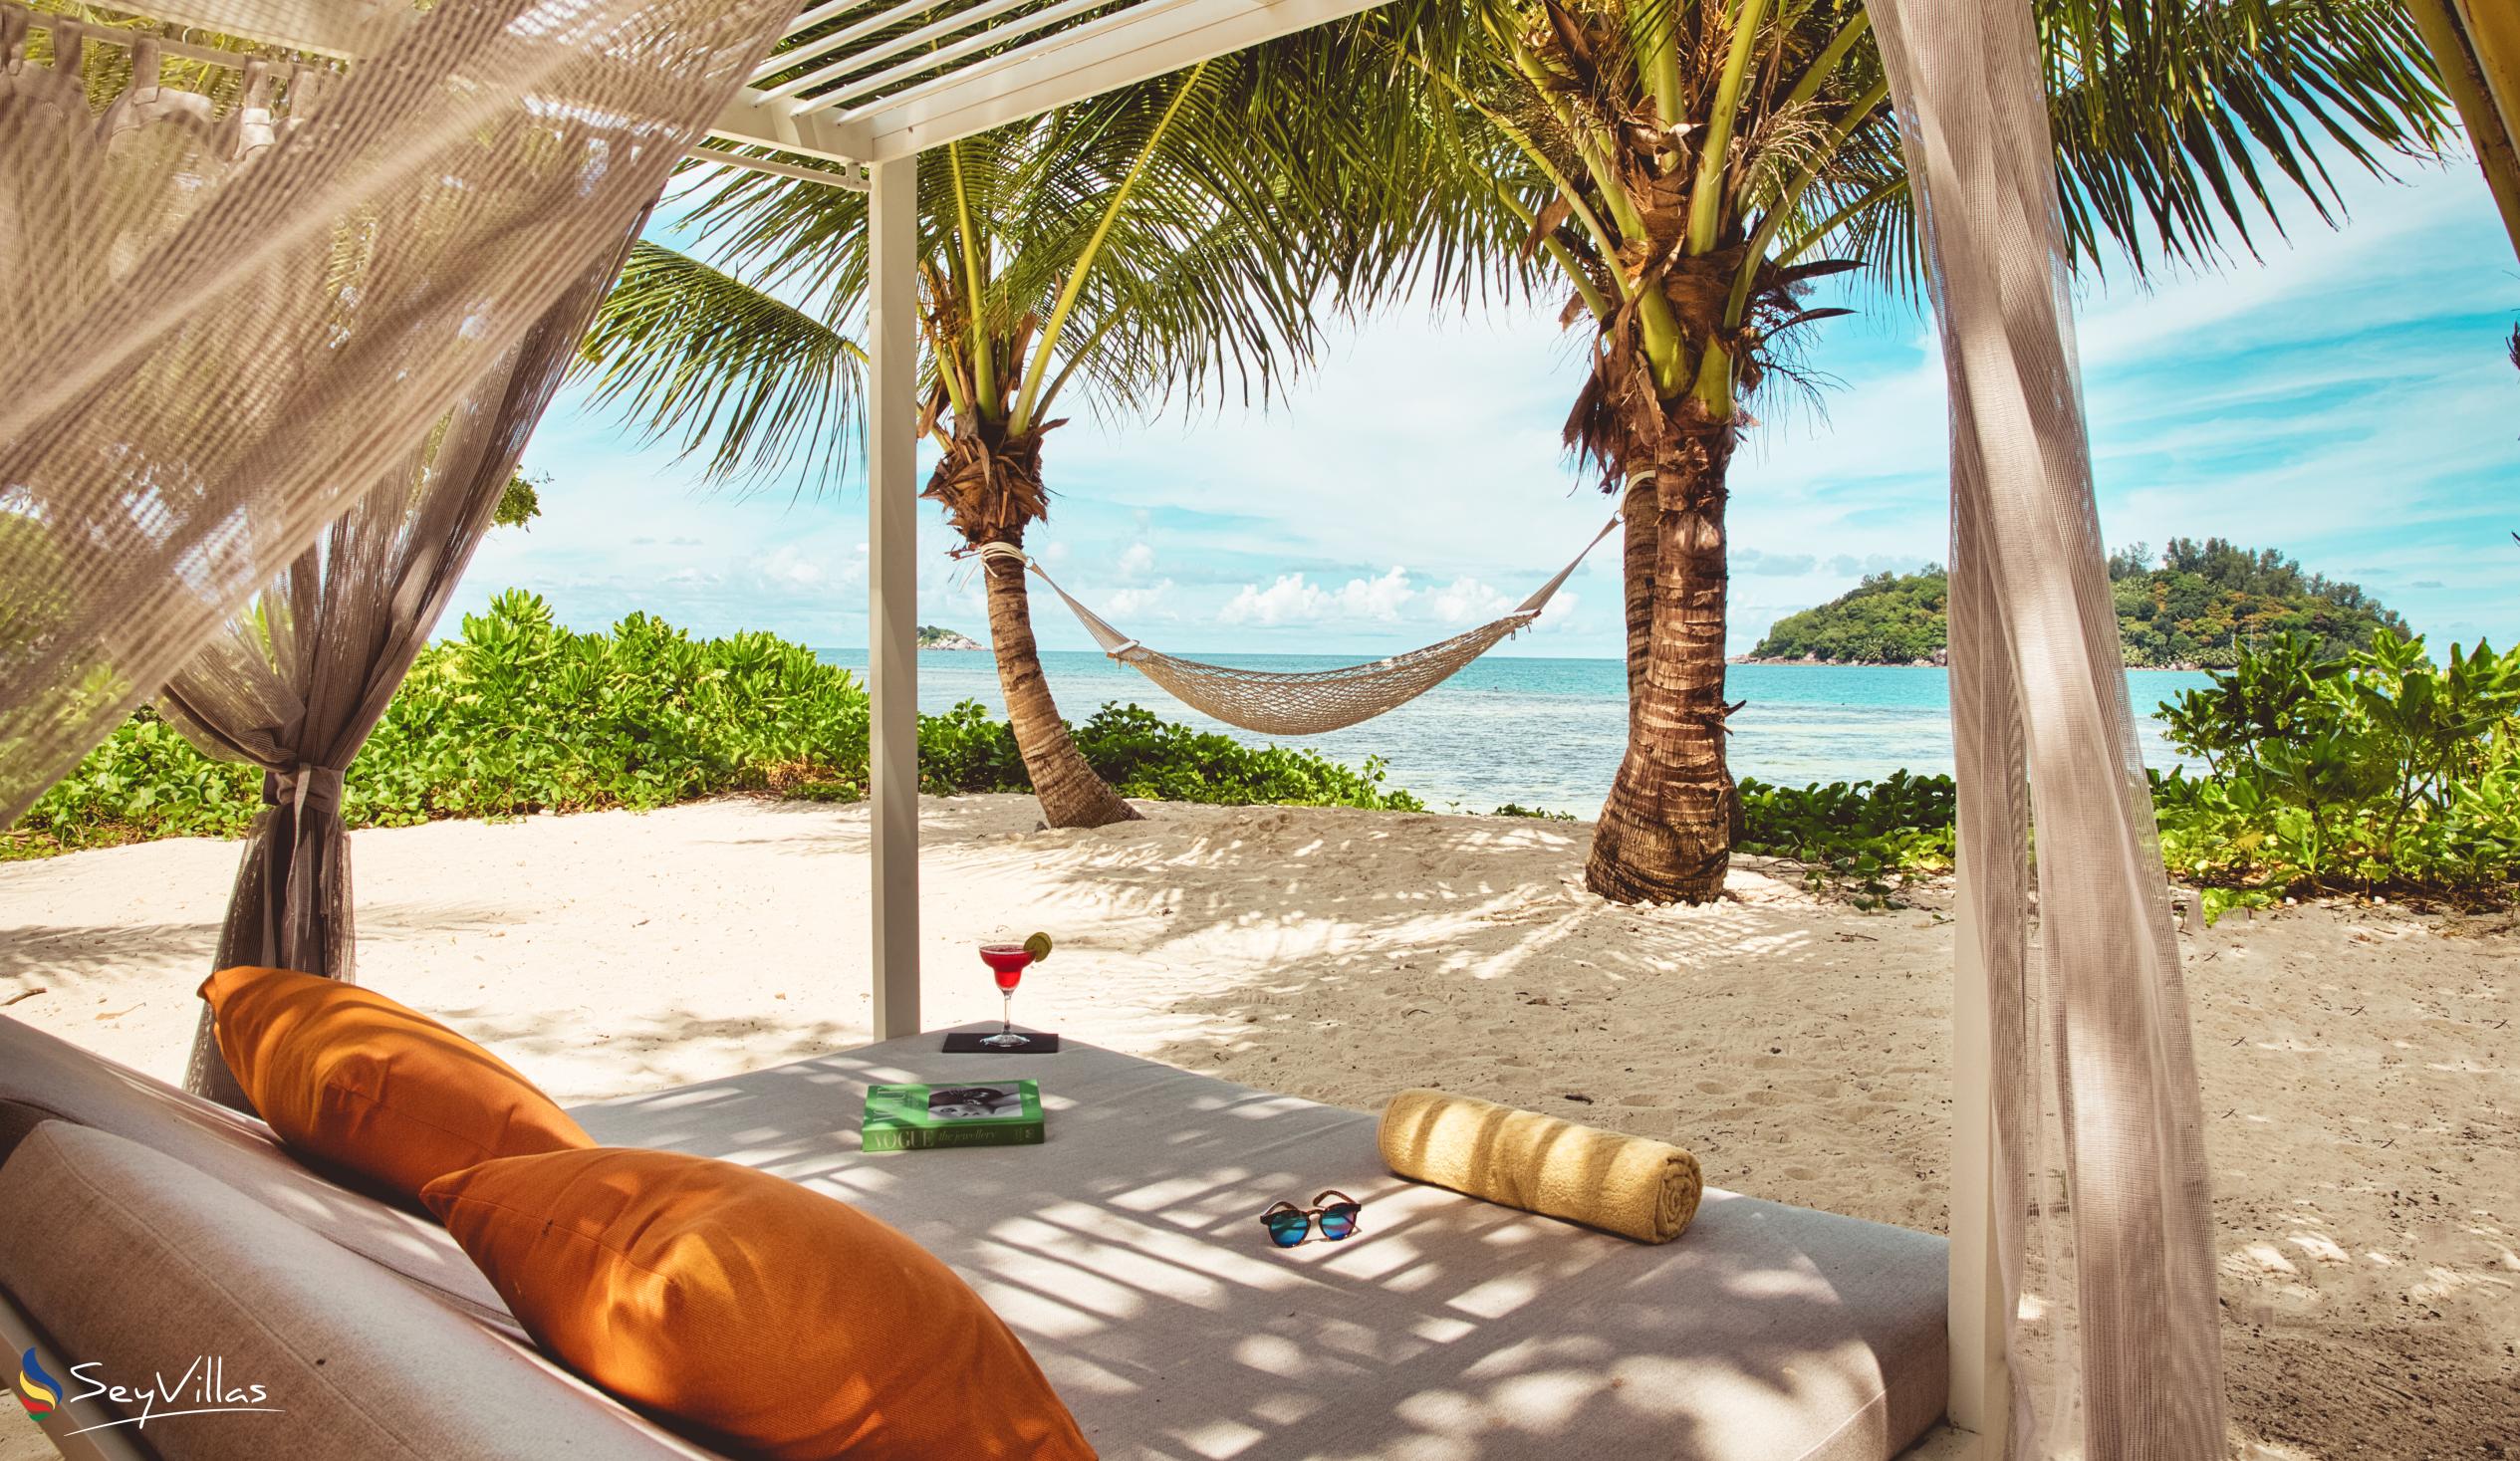 Foto 38: Club Med Seychelles - Posizione - Saint Anne (Seychelles)